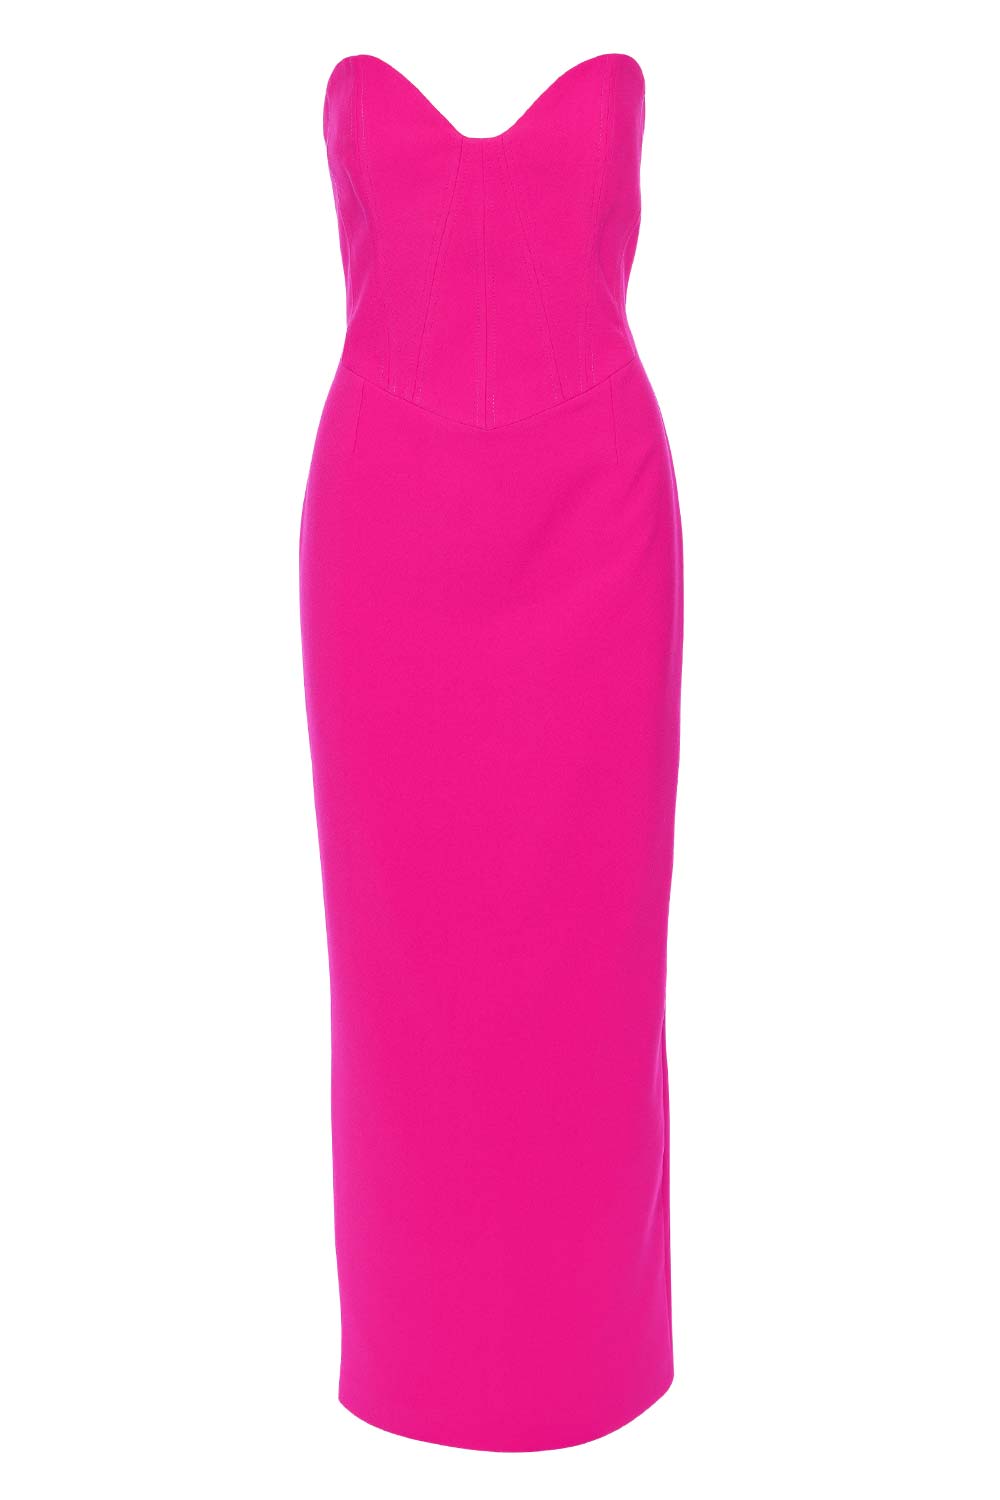 The New Arrivals by Ilkyaz Ozel Paloma Hot Pink Strapless Maxi Dress